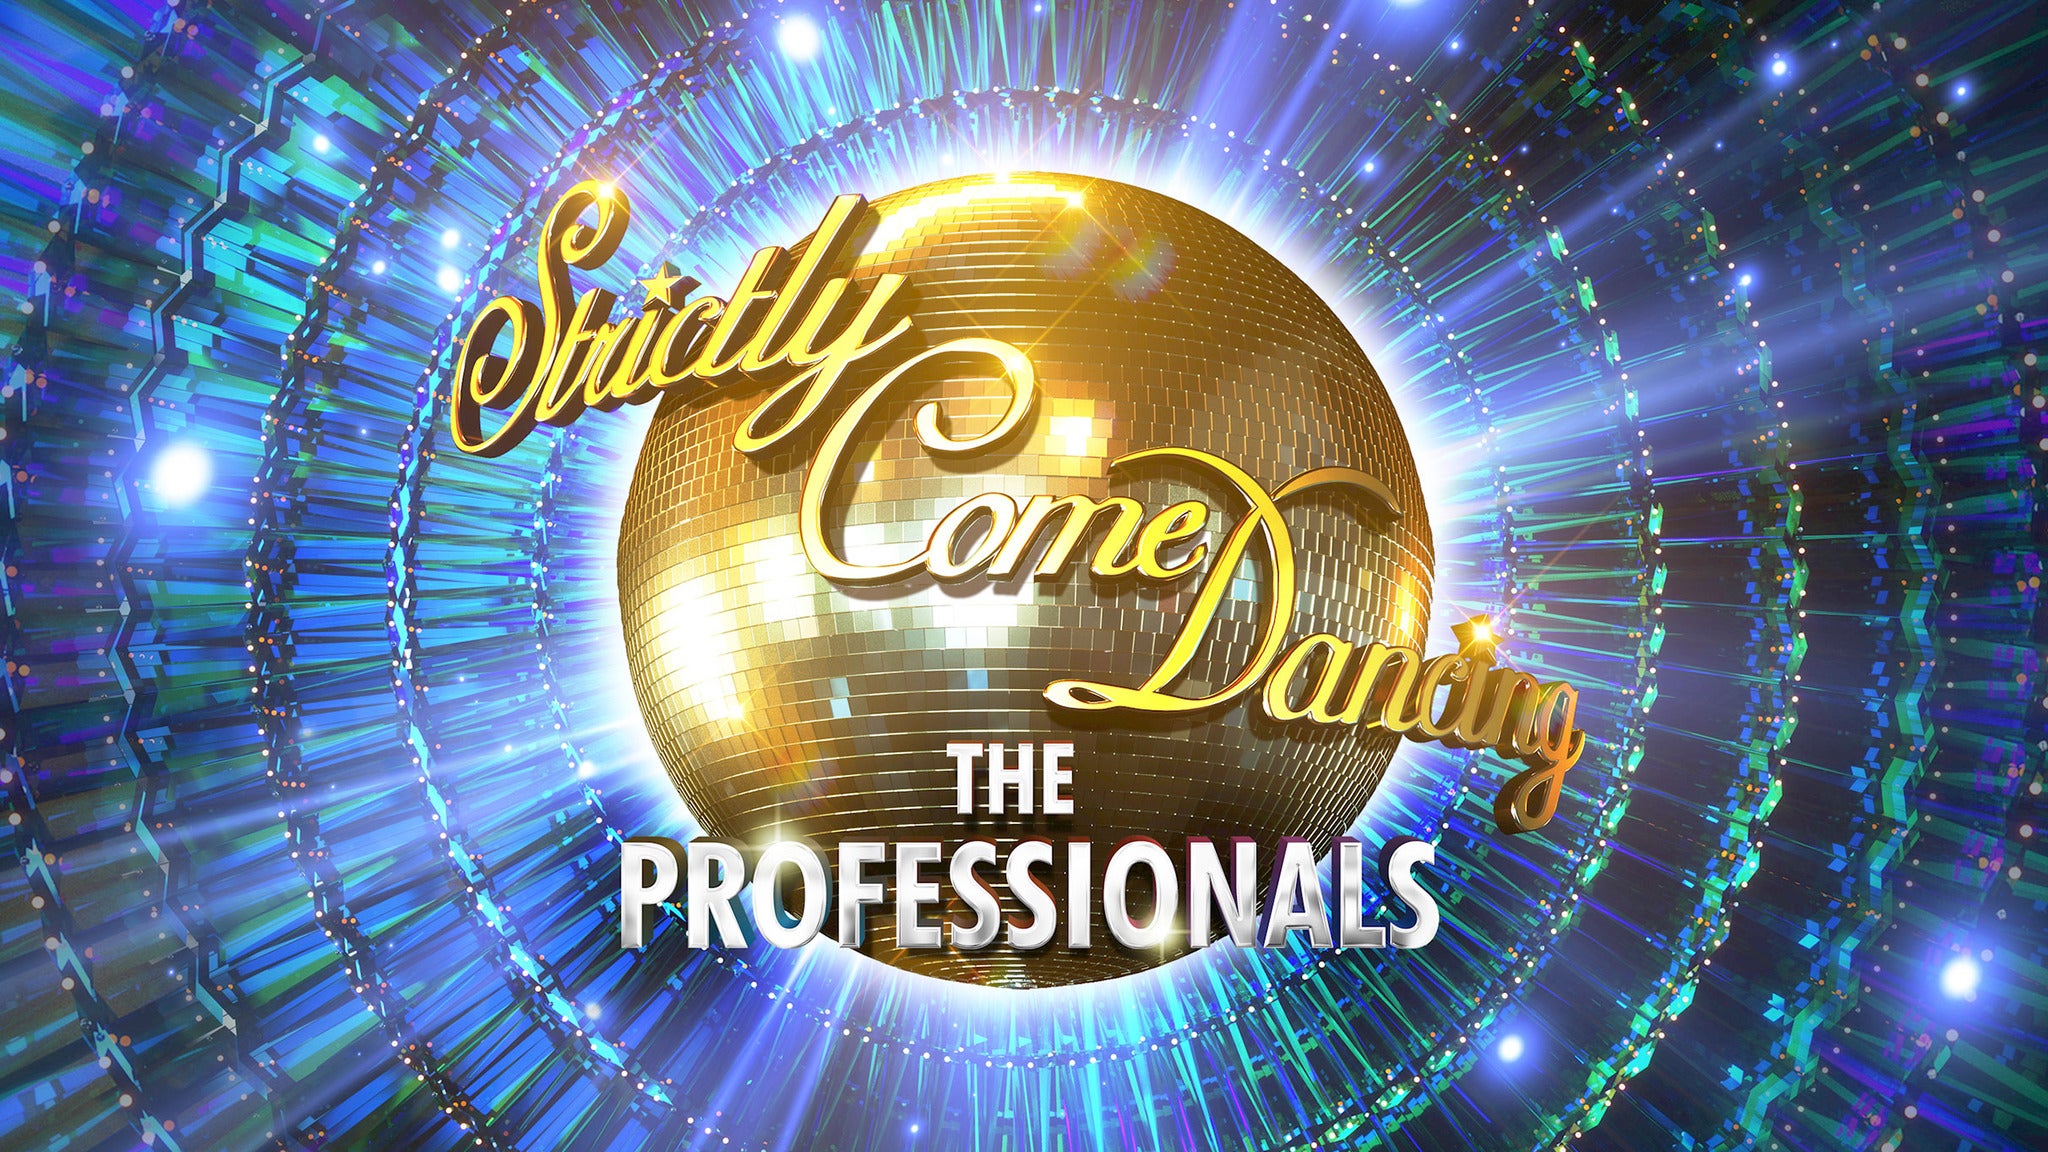 Strictly Come Dancing - the Professionals presale information on freepresalepasswords.com